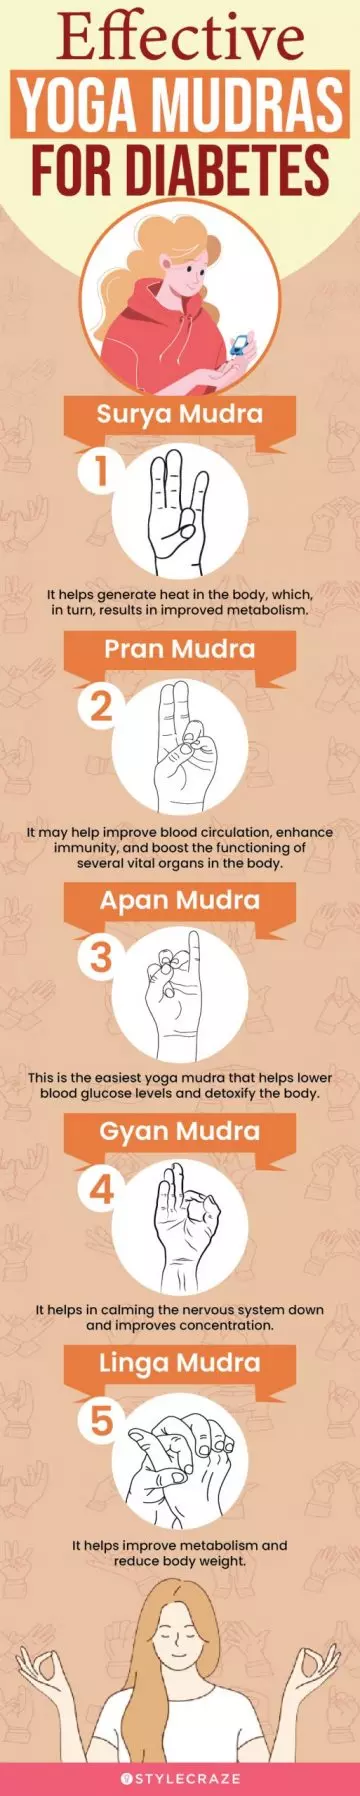 effective yoga mudras for diabetes(infographic)